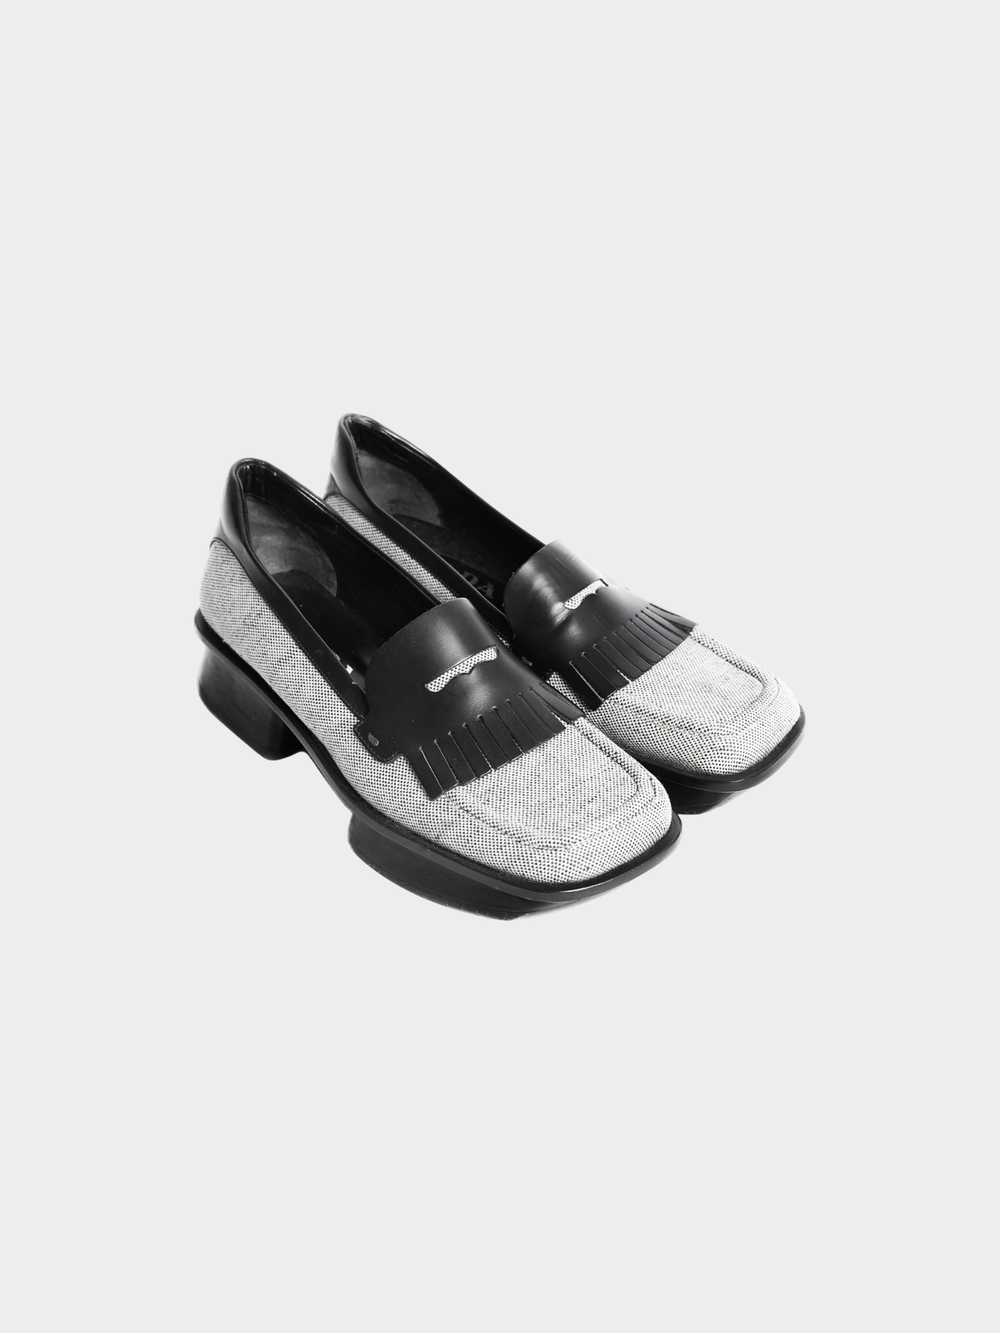 Prada SS 1999 Black and Grey Platform Loafers - image 2